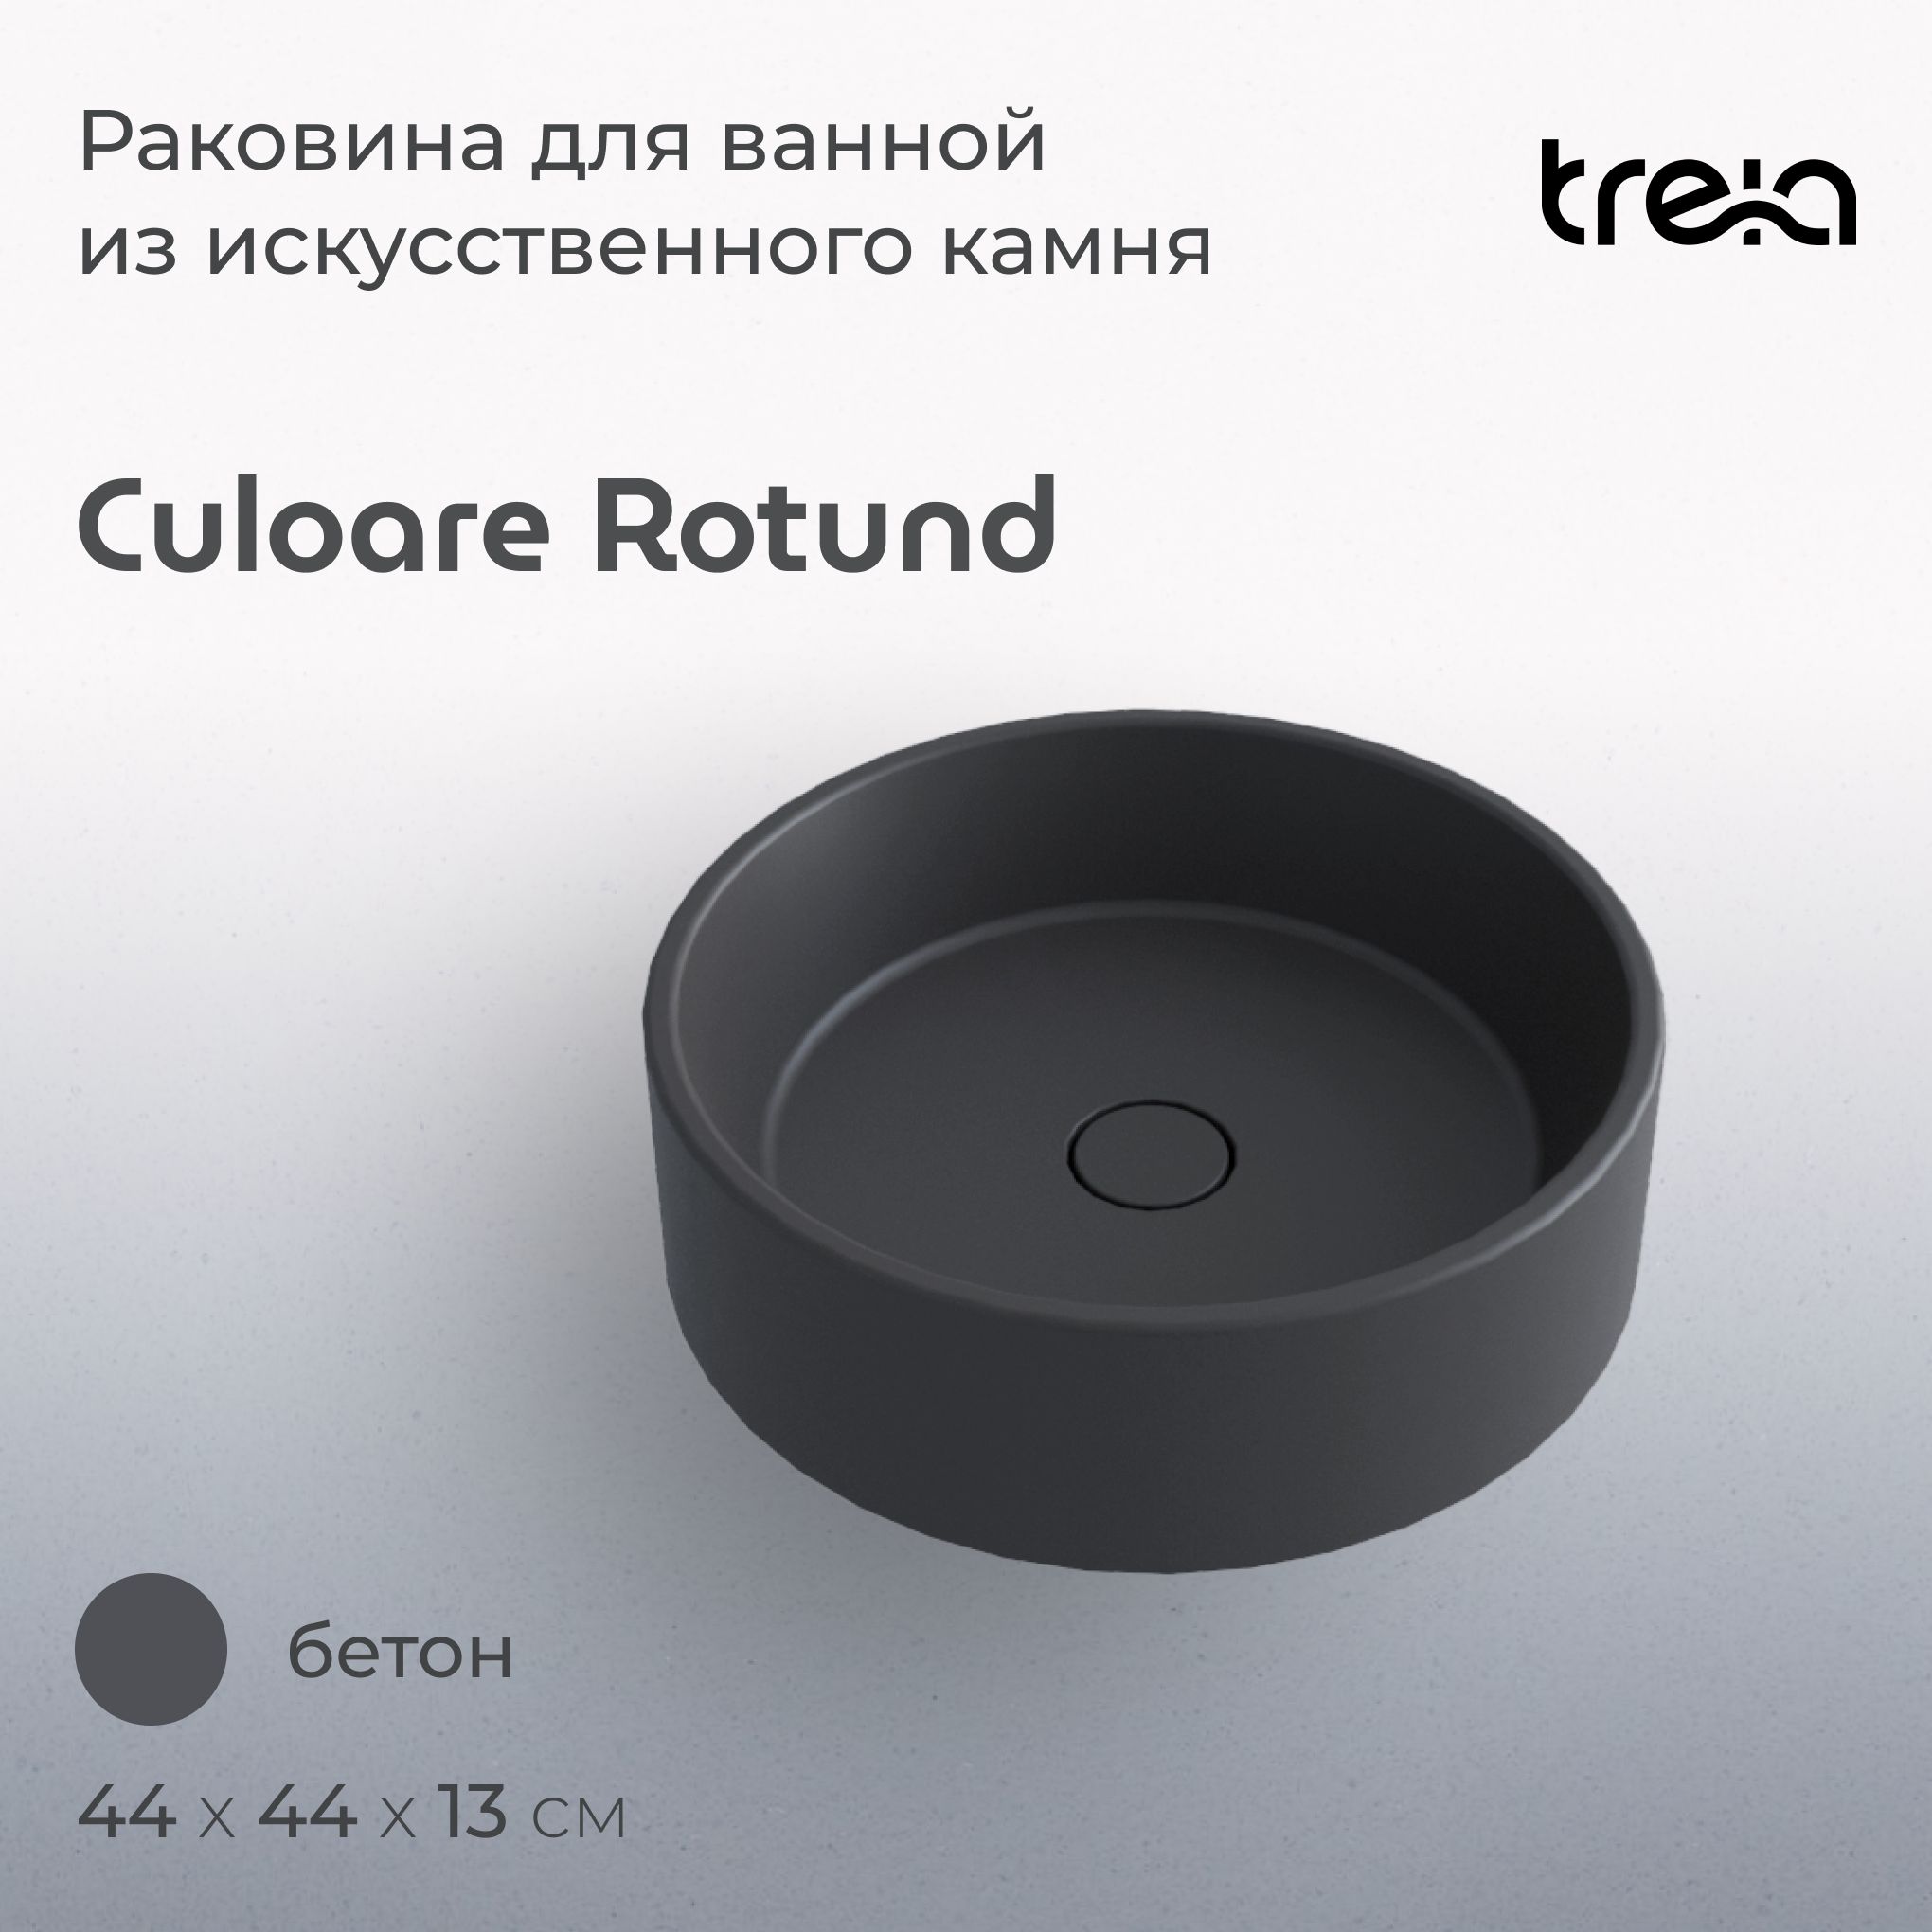 Накладная раковина круглая TREIA Culoare Rotund 440-05-Q, цвет бетон (серая) философия познания и творчество жизни